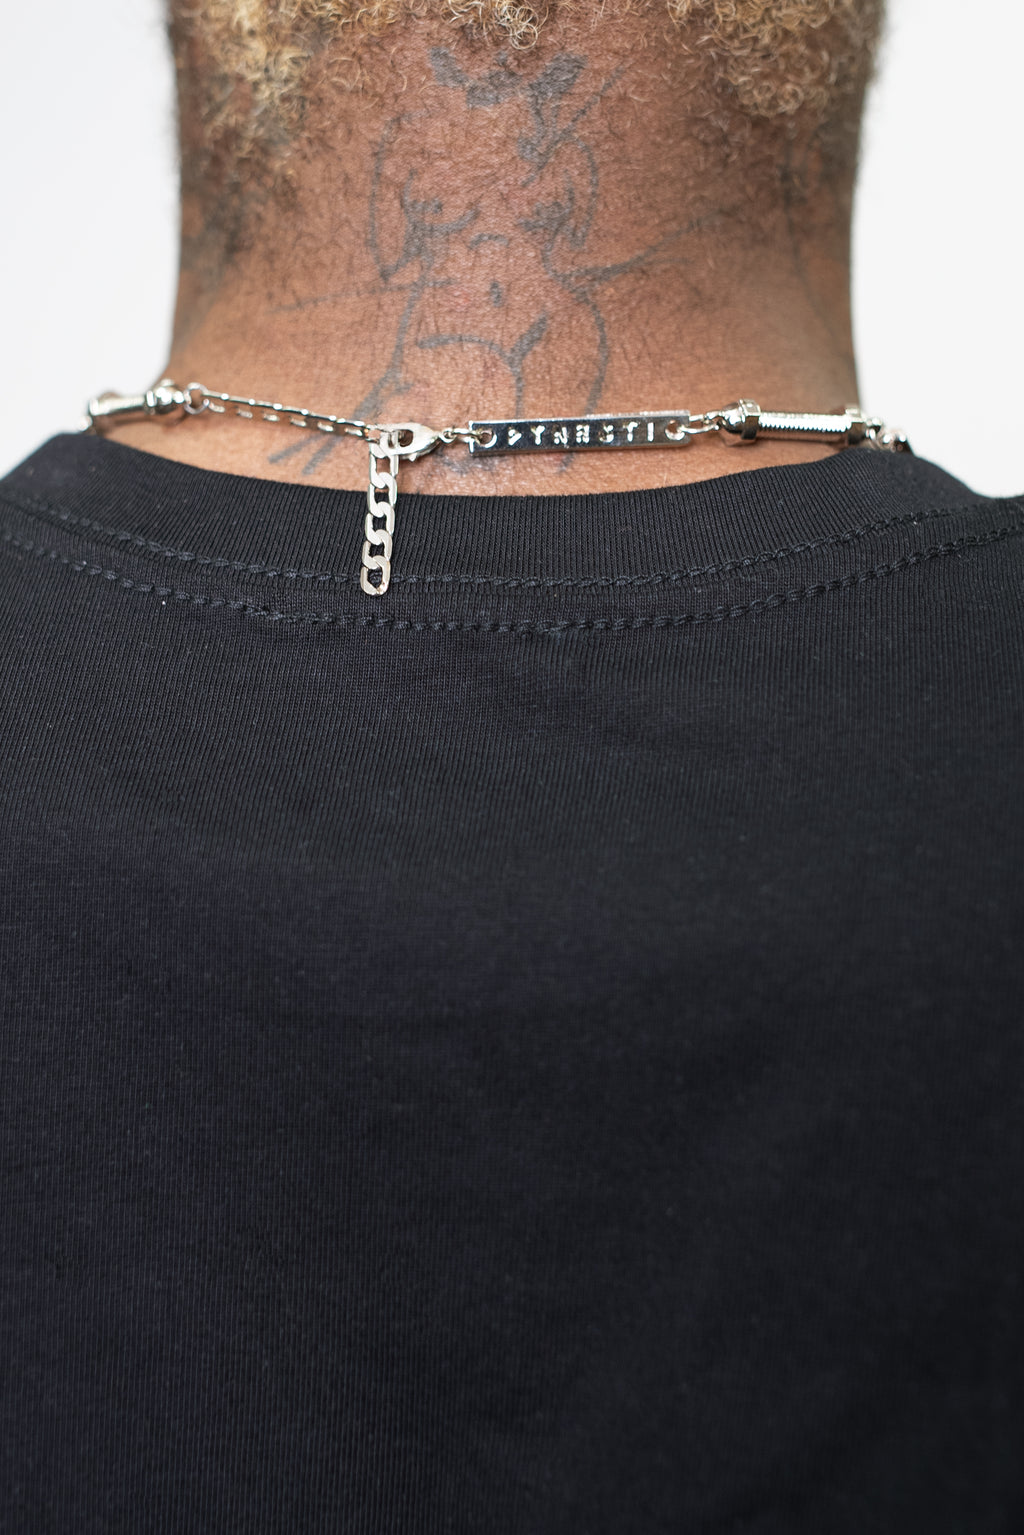 Dynasti Logo Chain Necklace